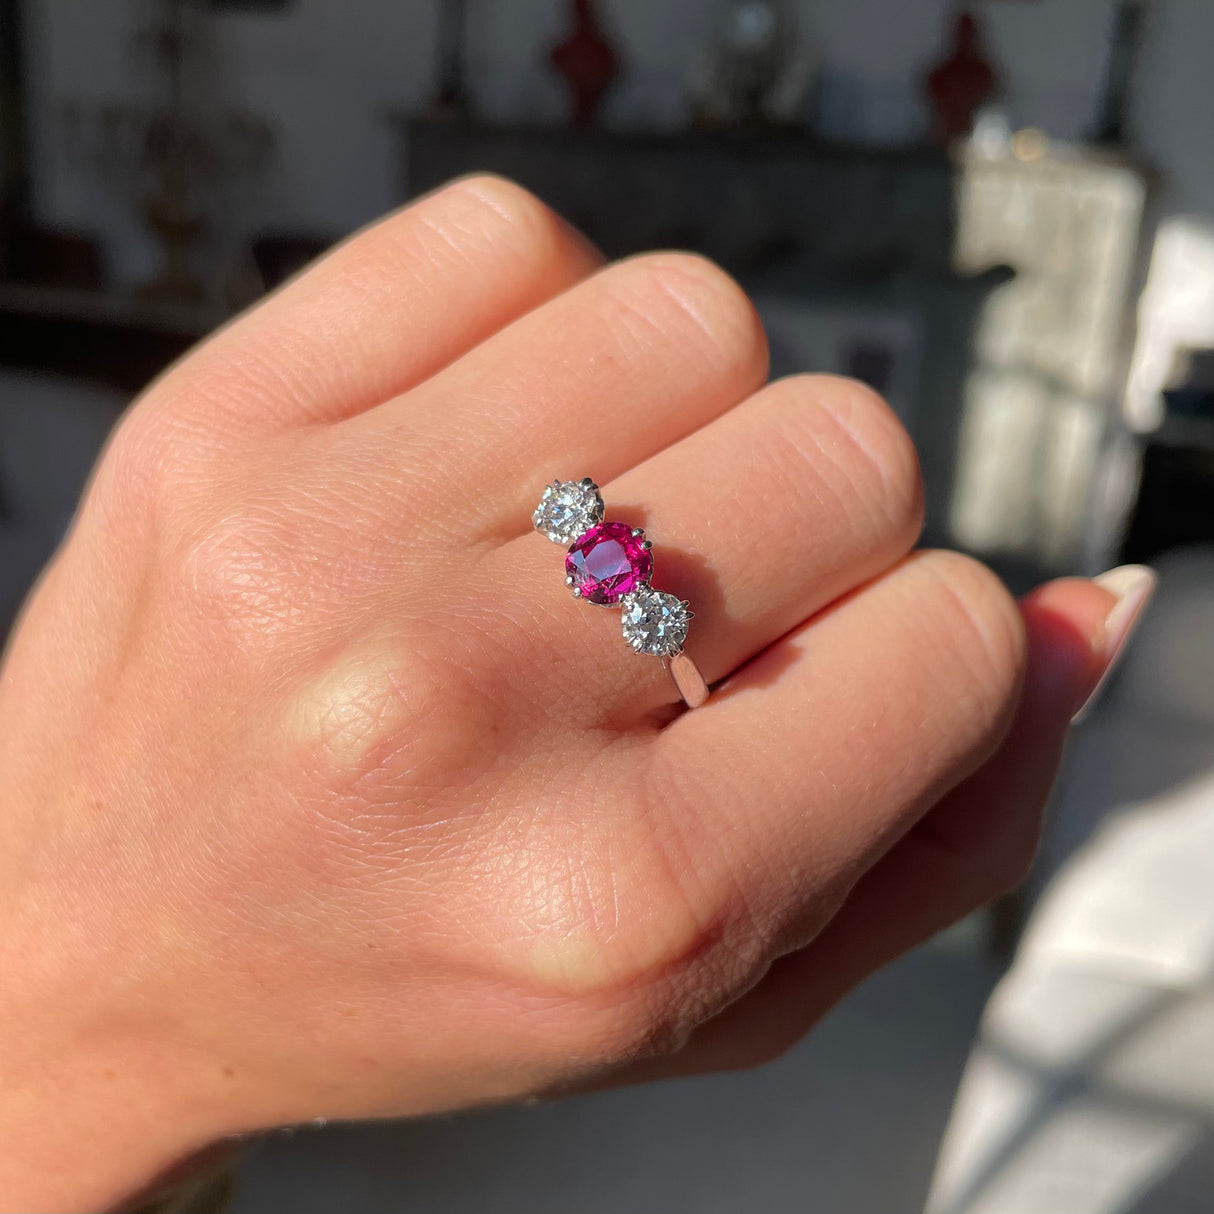 Ruby and diamond three-stone engagement ring, worn on hand.